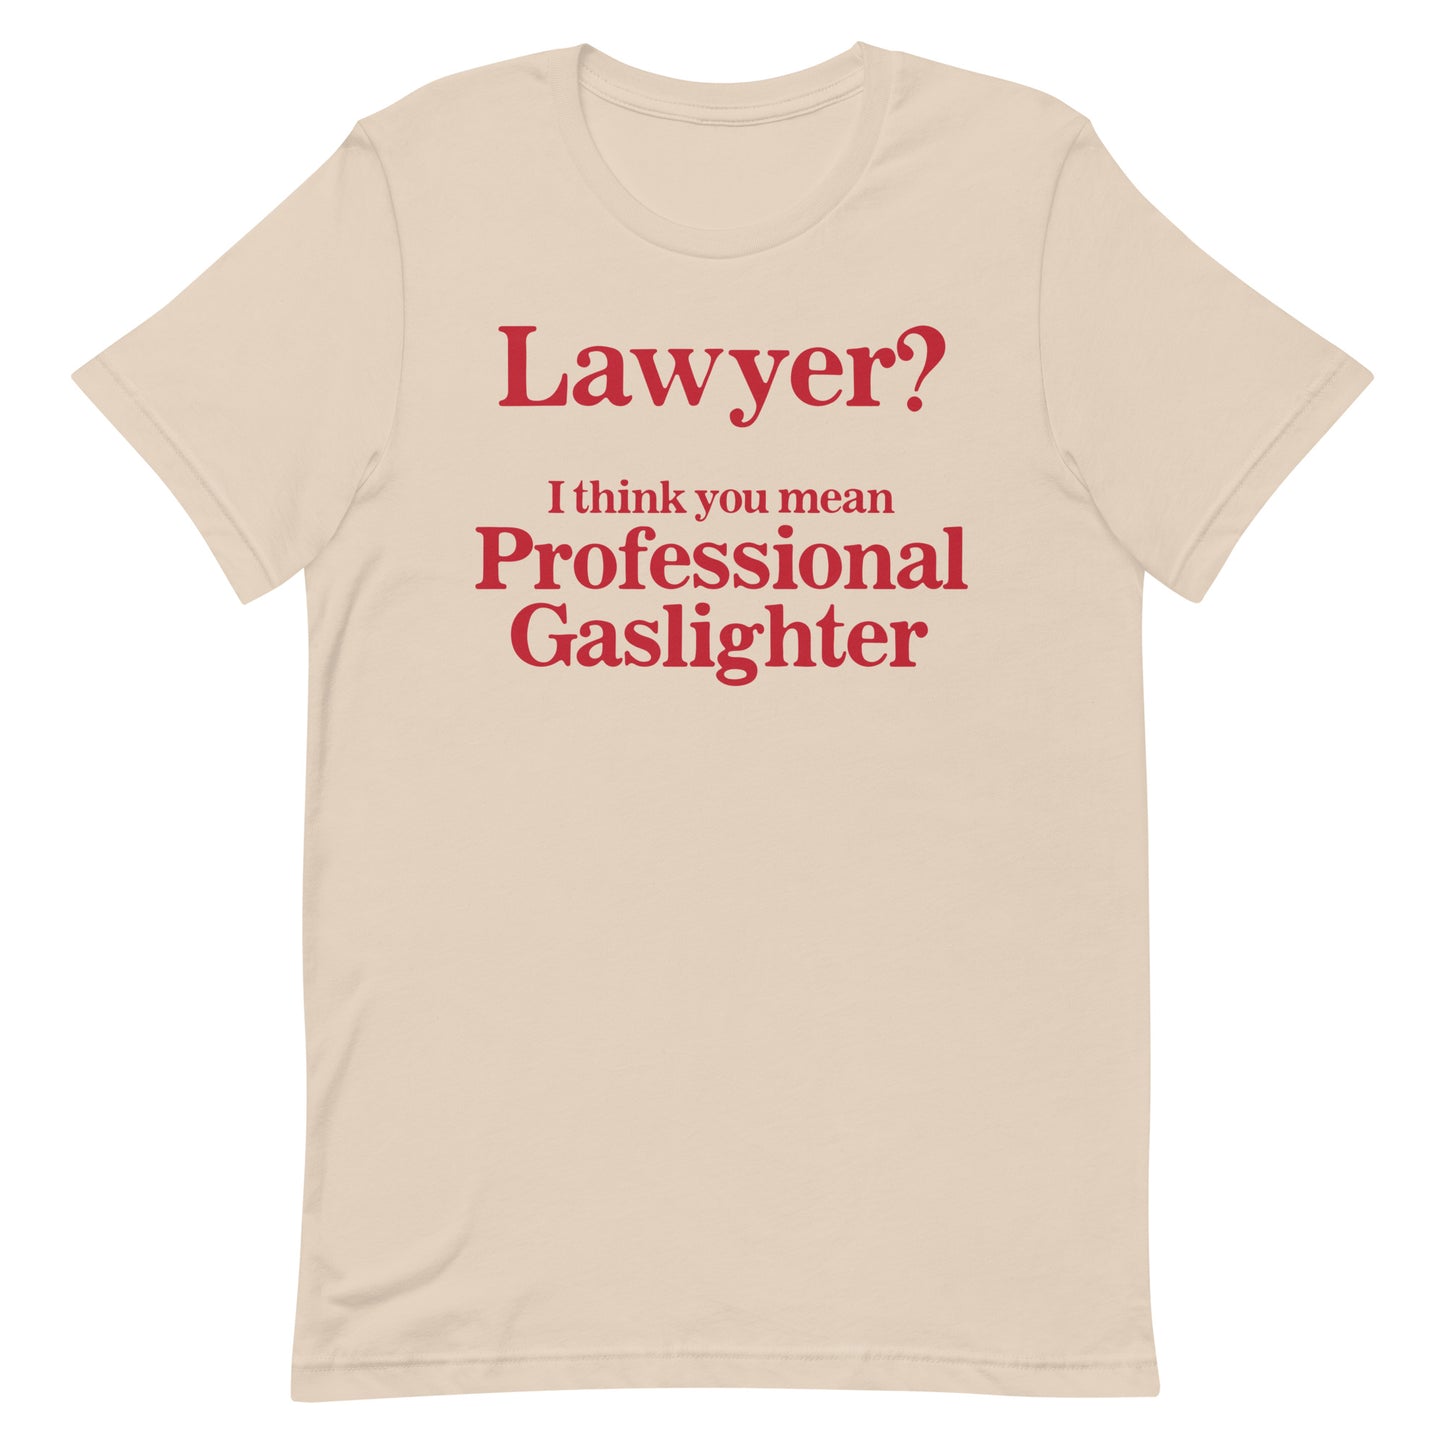 Lawyer? (Professional Gaslighter) Unisex t-shirt